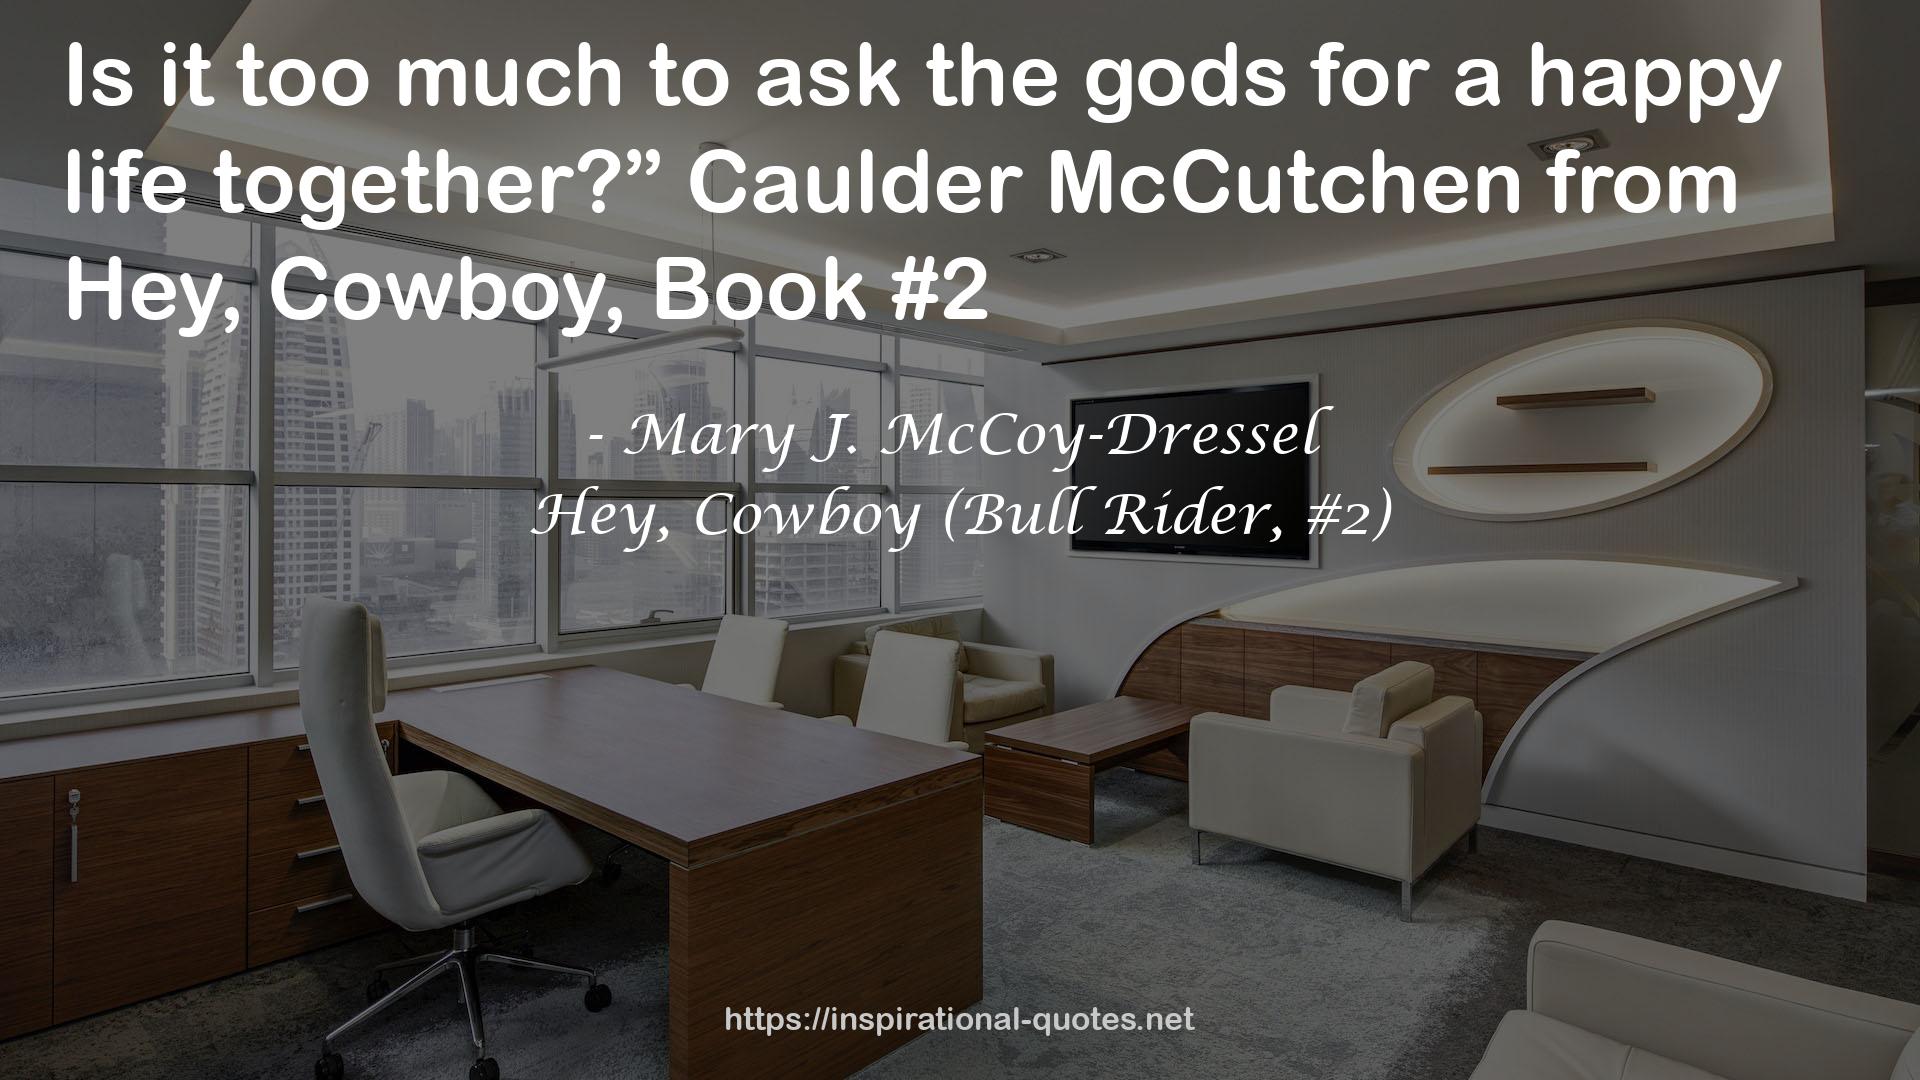 Hey, Cowboy (Bull Rider, #2) QUOTES